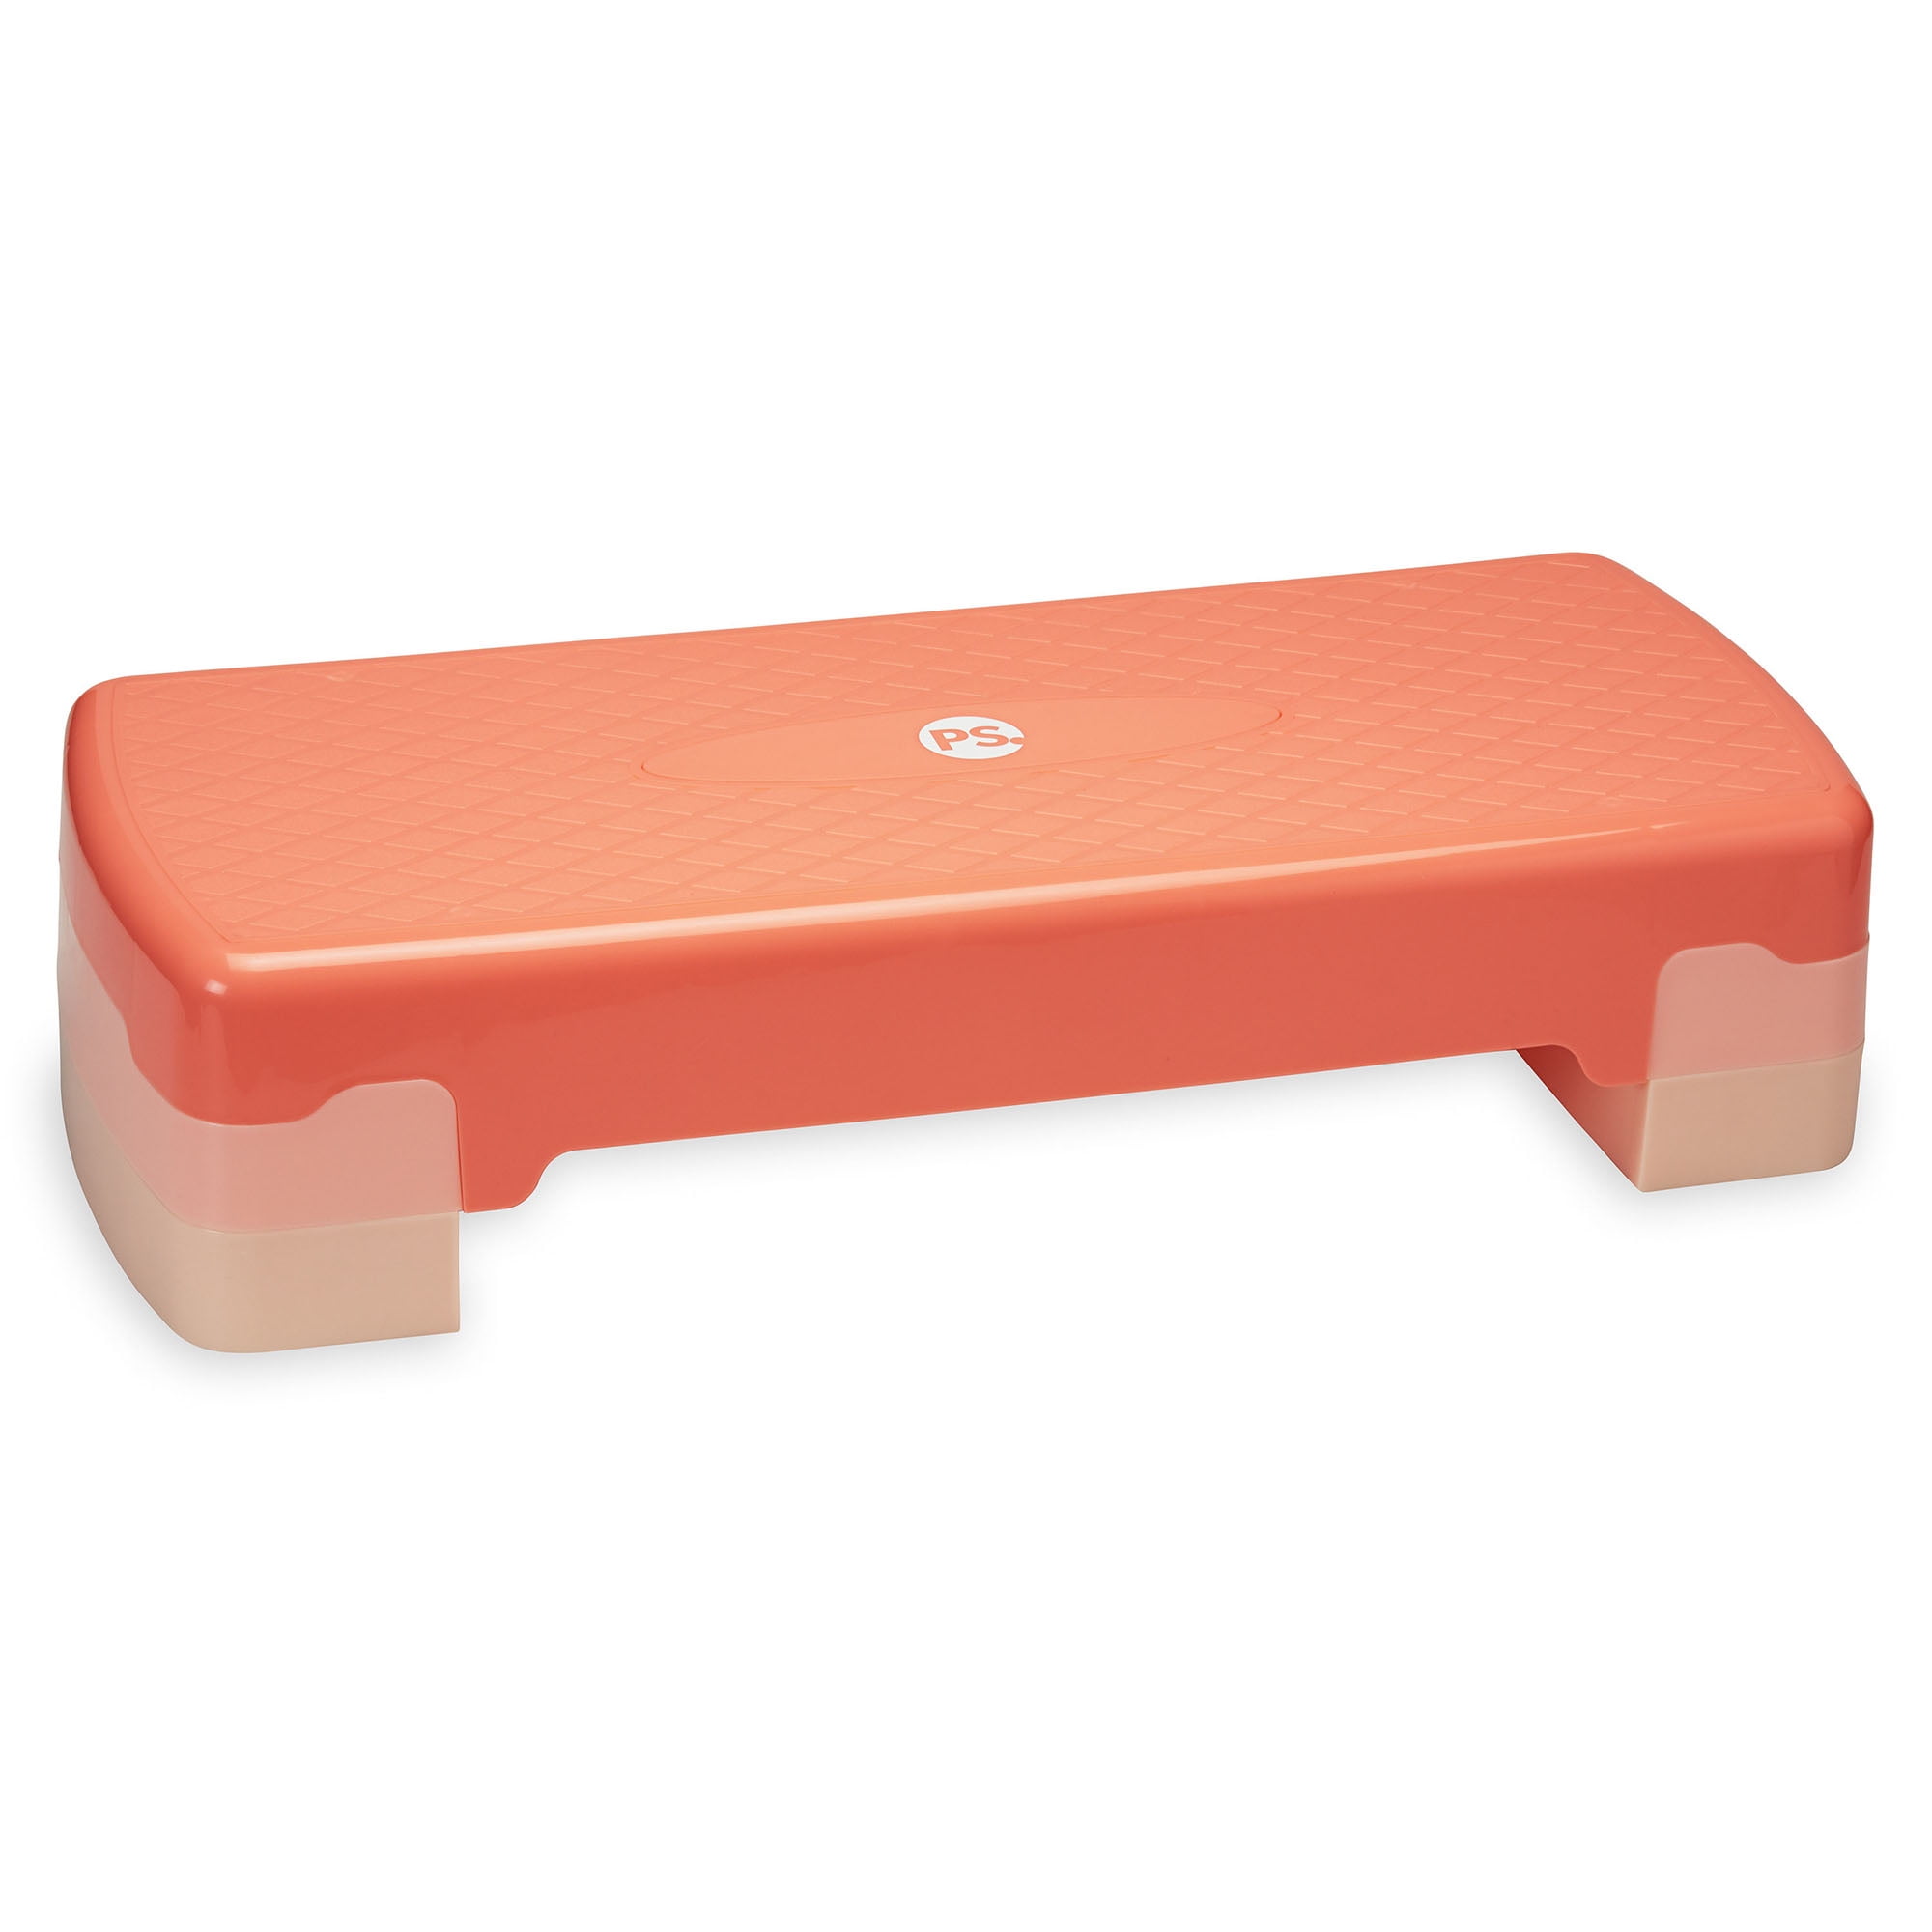 POPSUGAR Aerobic Step Deck, Adjustable Height & Non Slip Surface, Coral